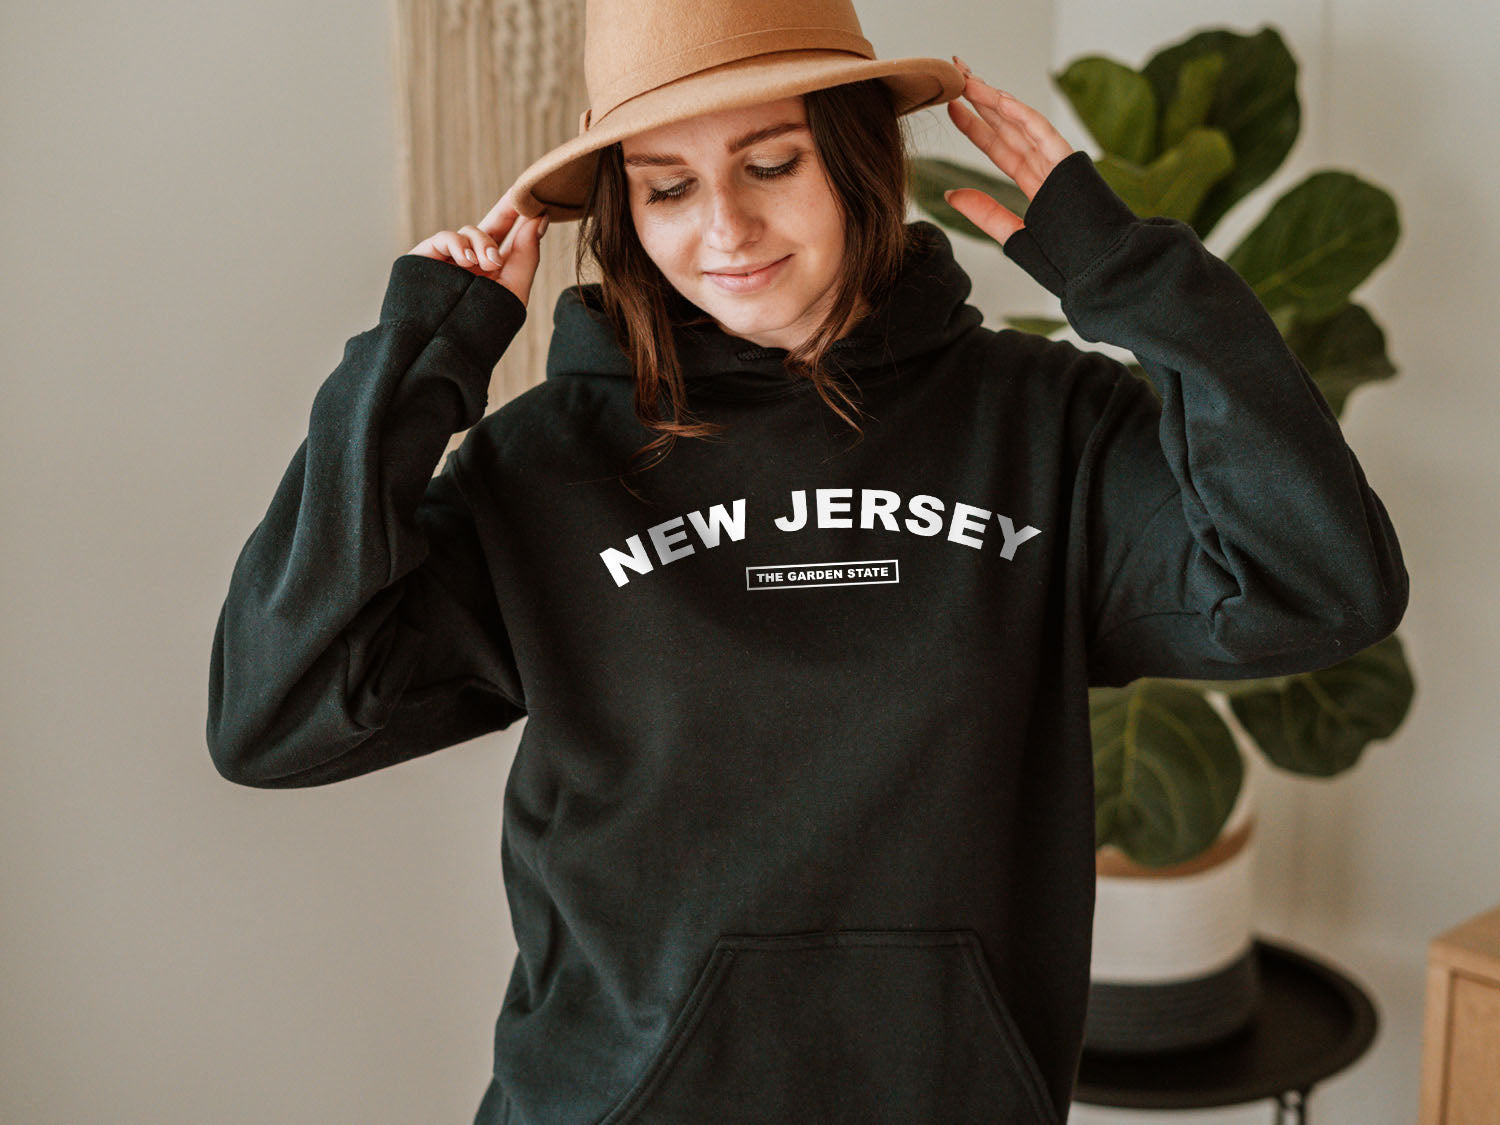 New Jersey The Garden State Hoodie - United States Name & Slogan Minimal Design Printed Hoodie